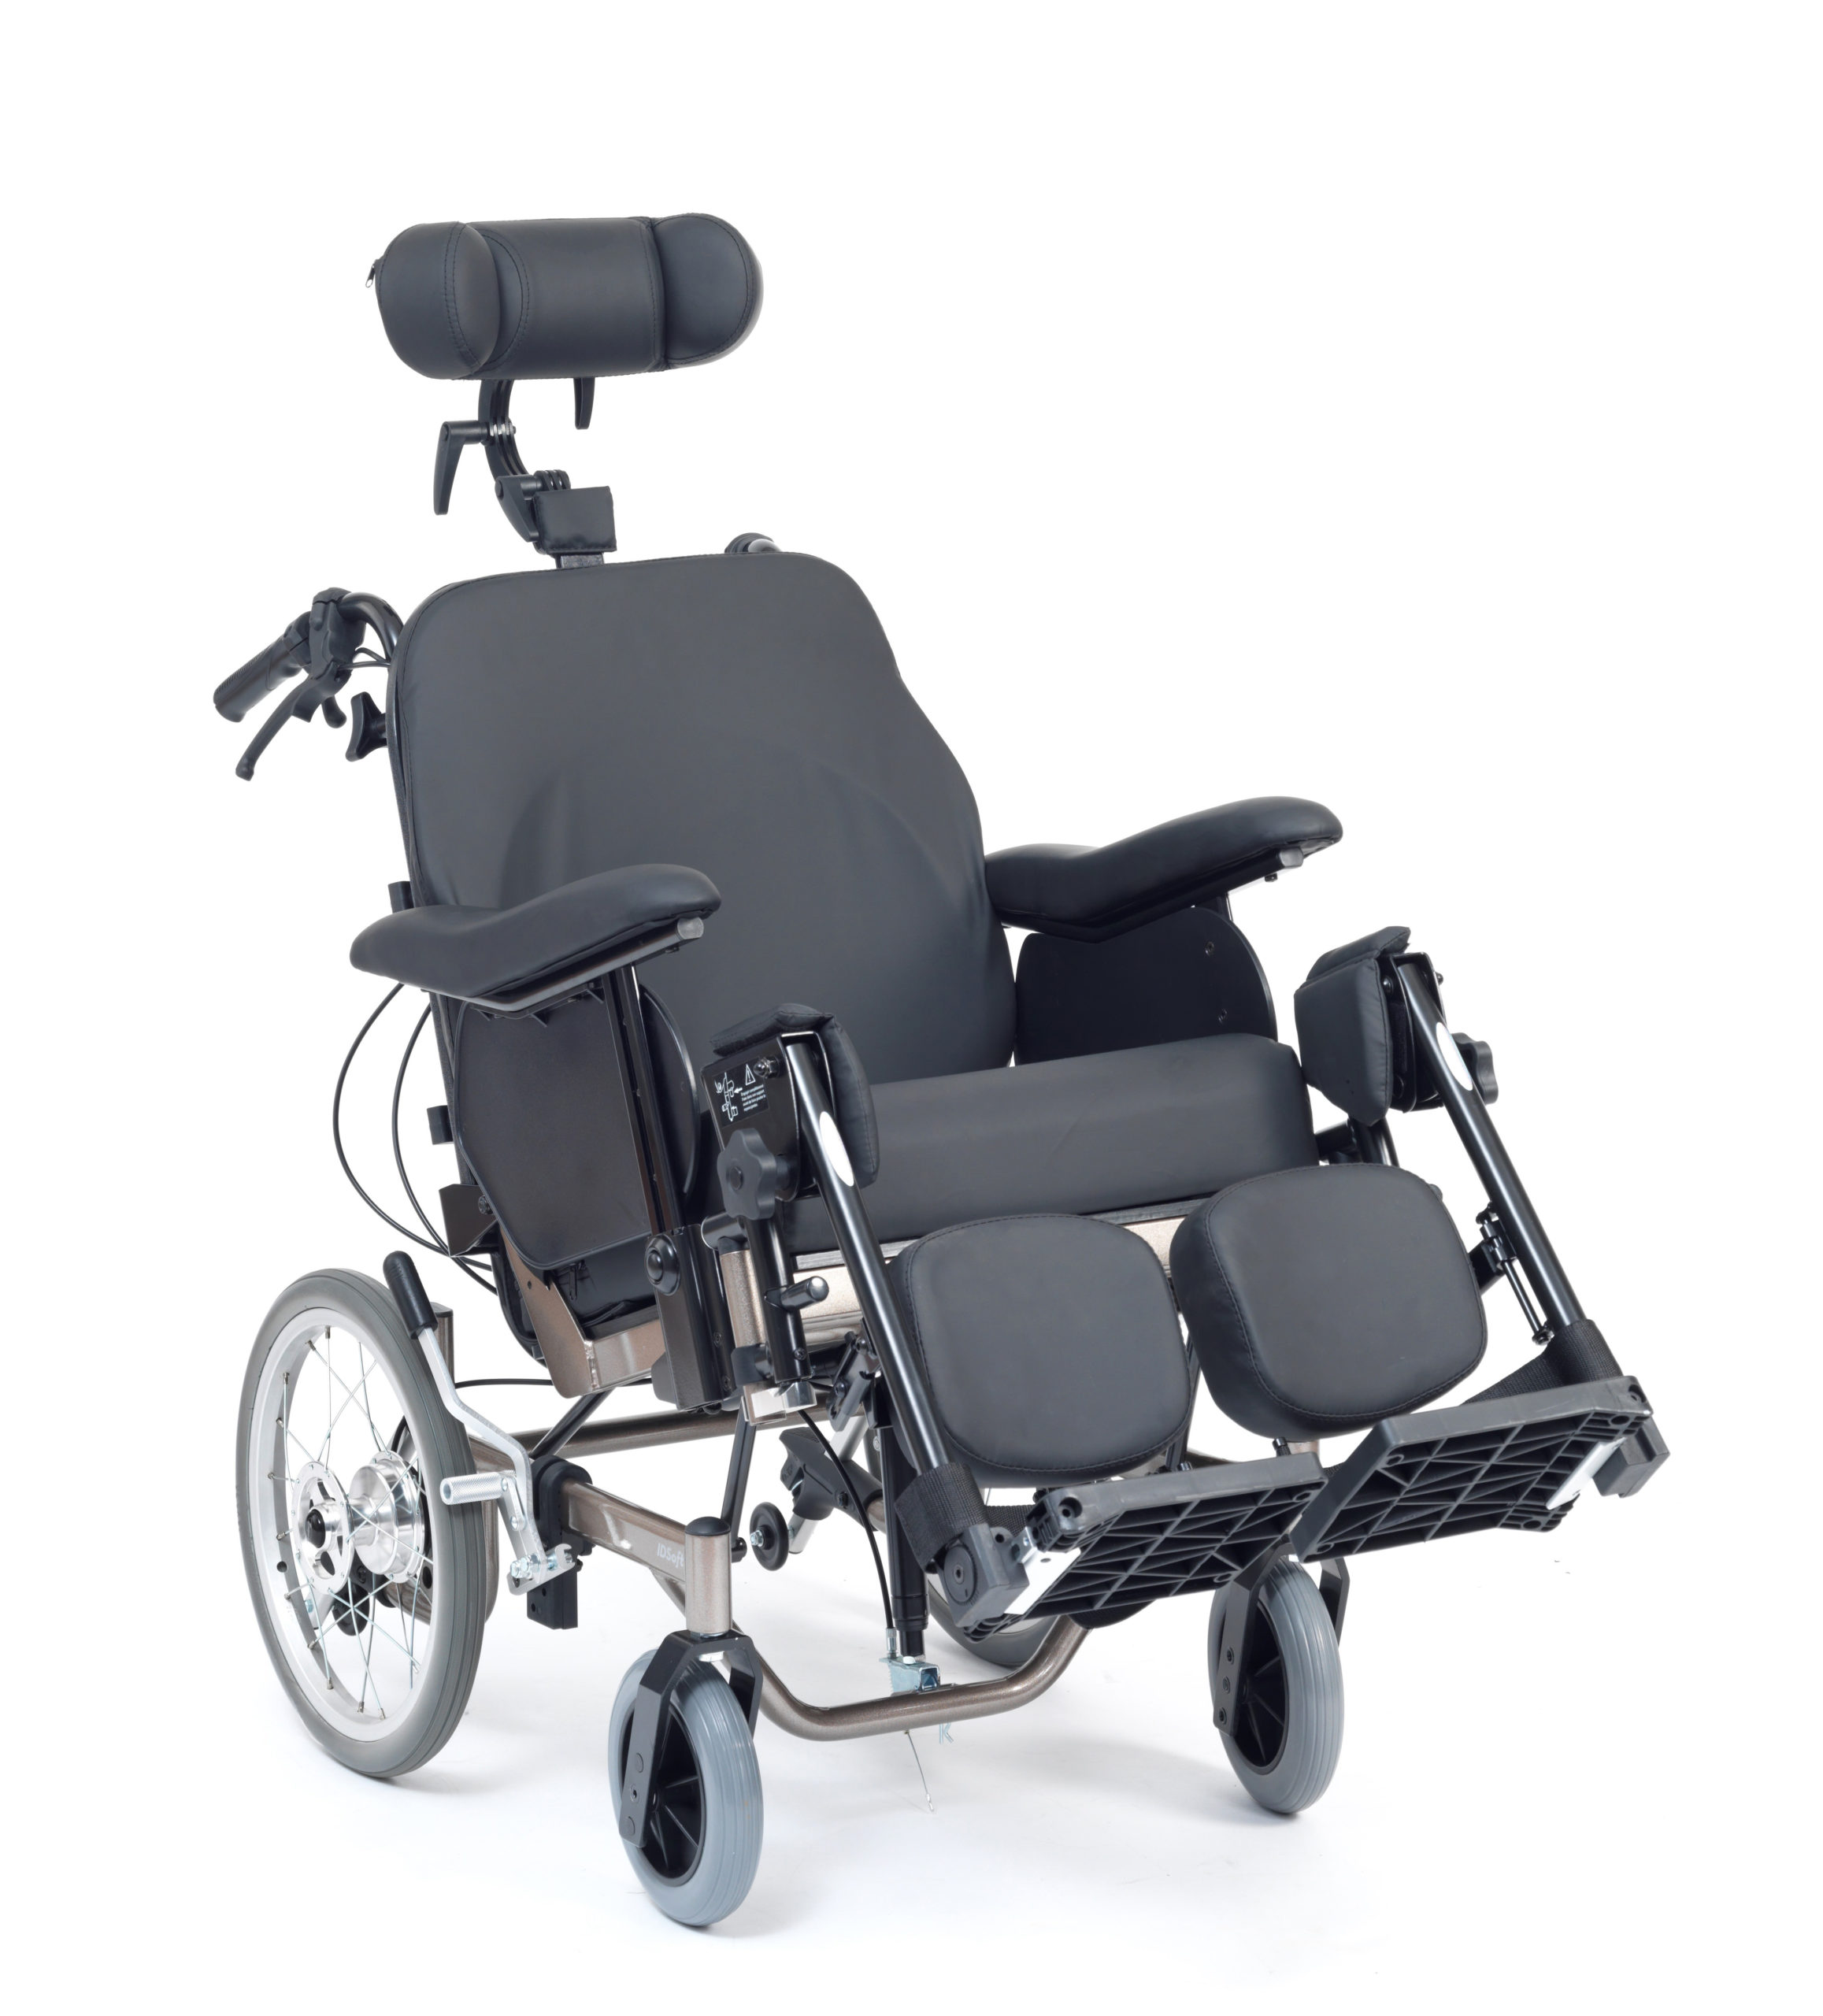 Transport chair/ Reclining Wheelchair - Transit Wheel 16" Seat | Medical Supermarket